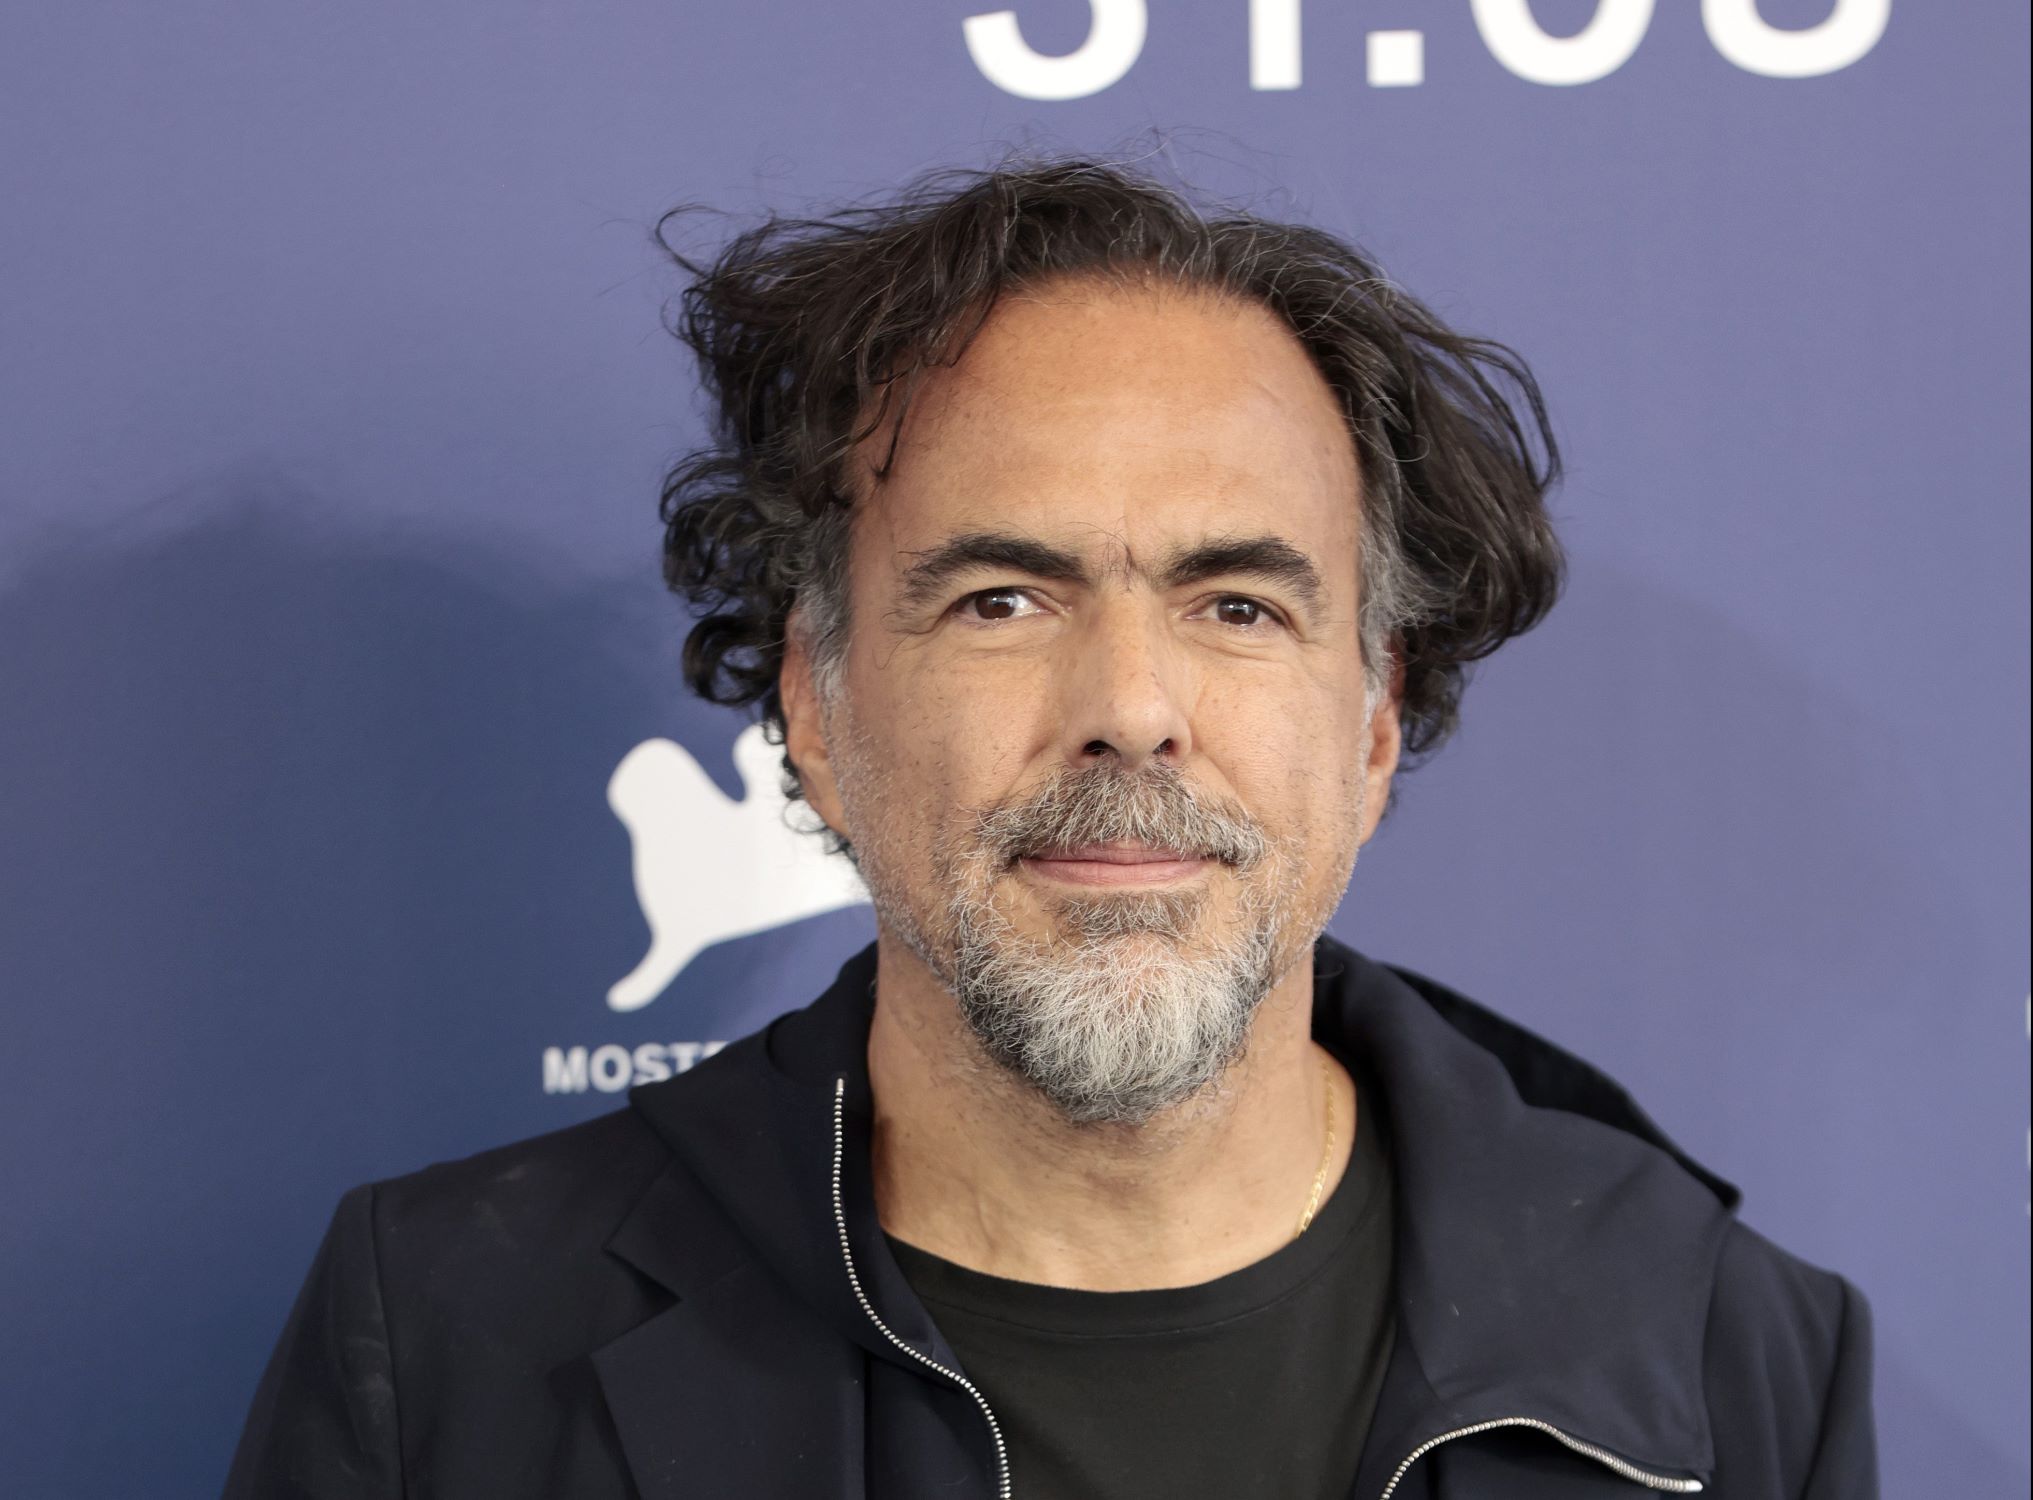 11 Astonishing Facts About Alejandro González Iñárritu - Facts.net